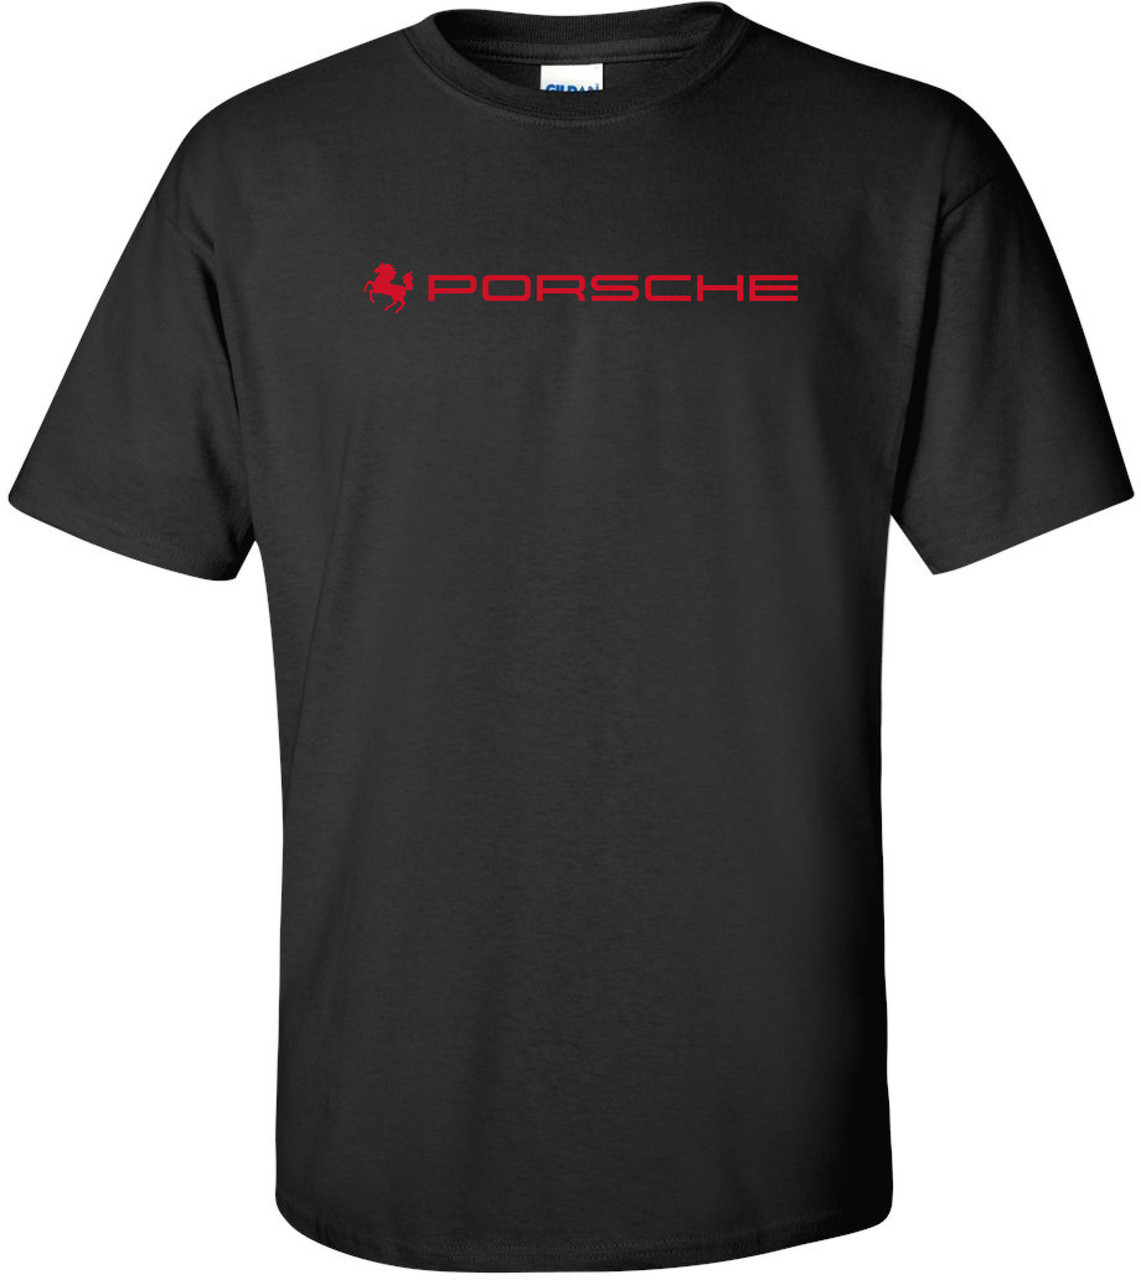 Porsche Vintage Logo German Car Company T-Shirt - Interspace180